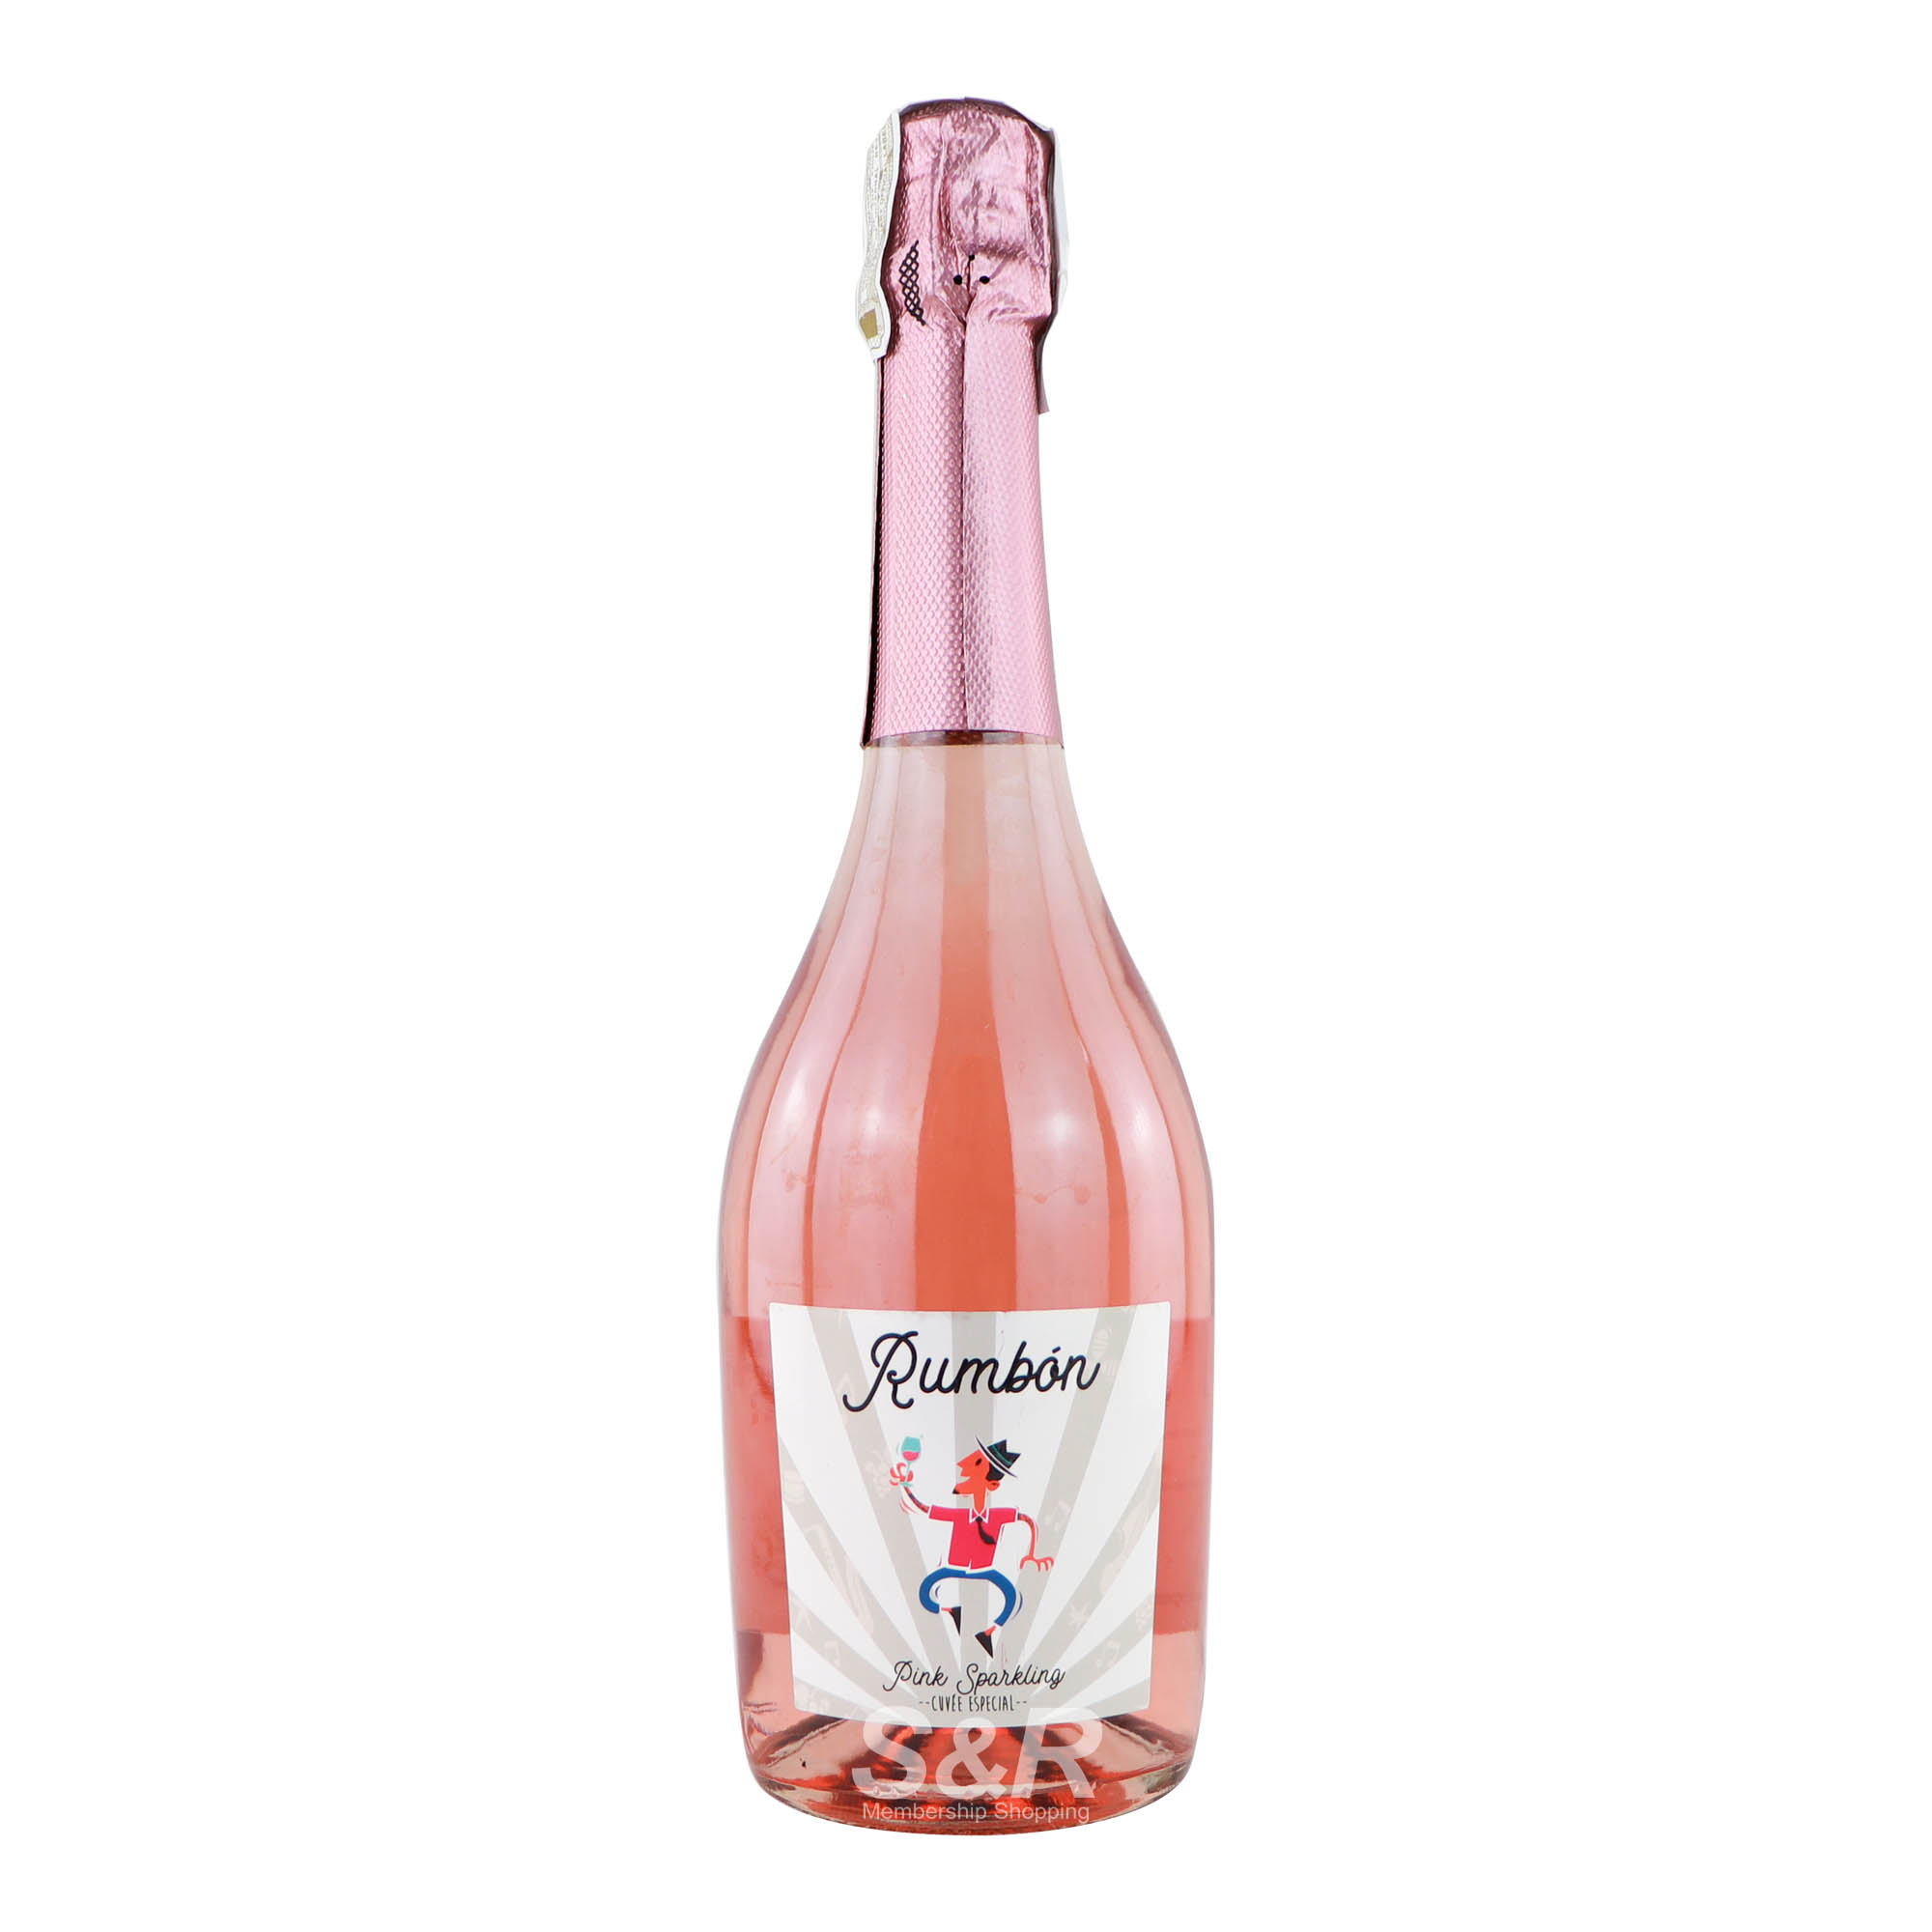 Rumbon Pink Sparkling Wine 750mL